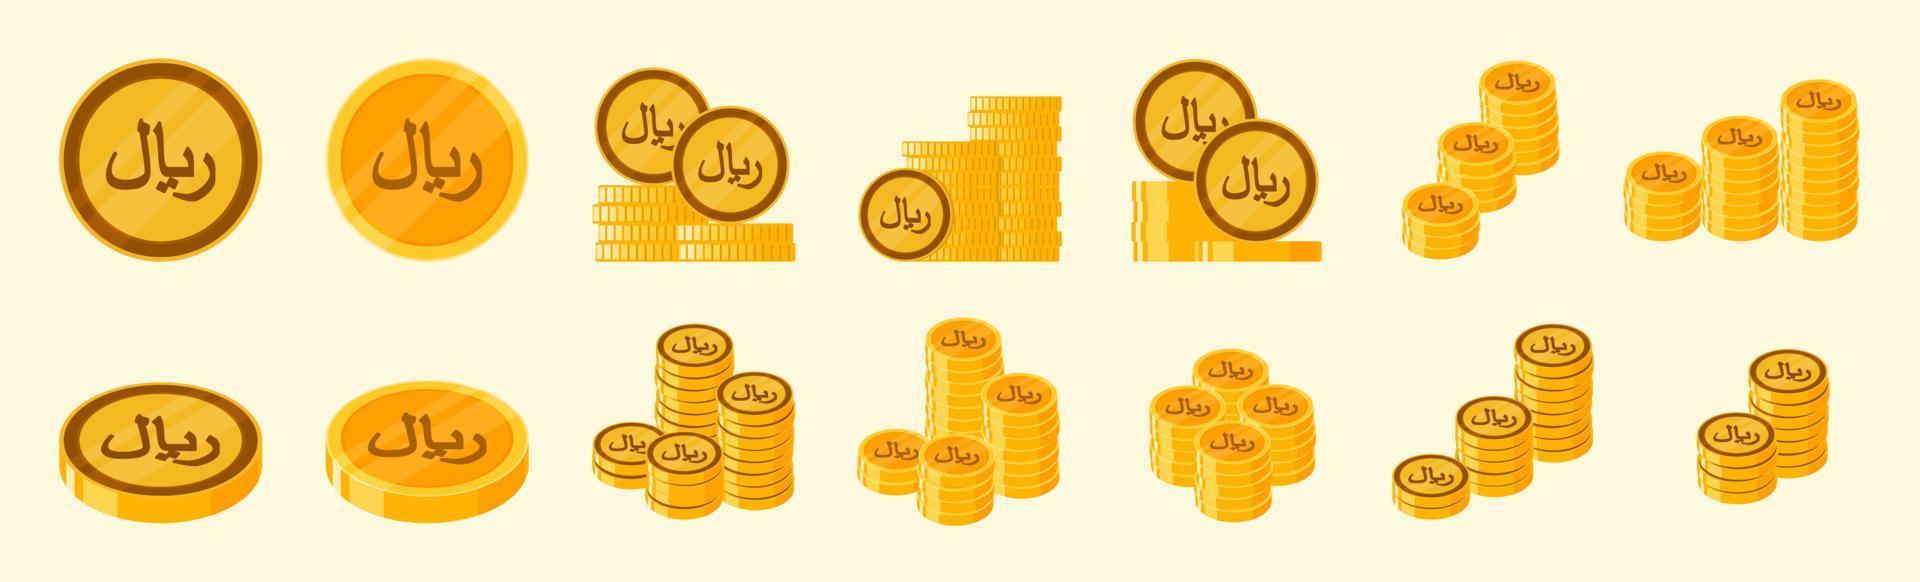 conjunto de ícones de moeda do rial saudita vetor